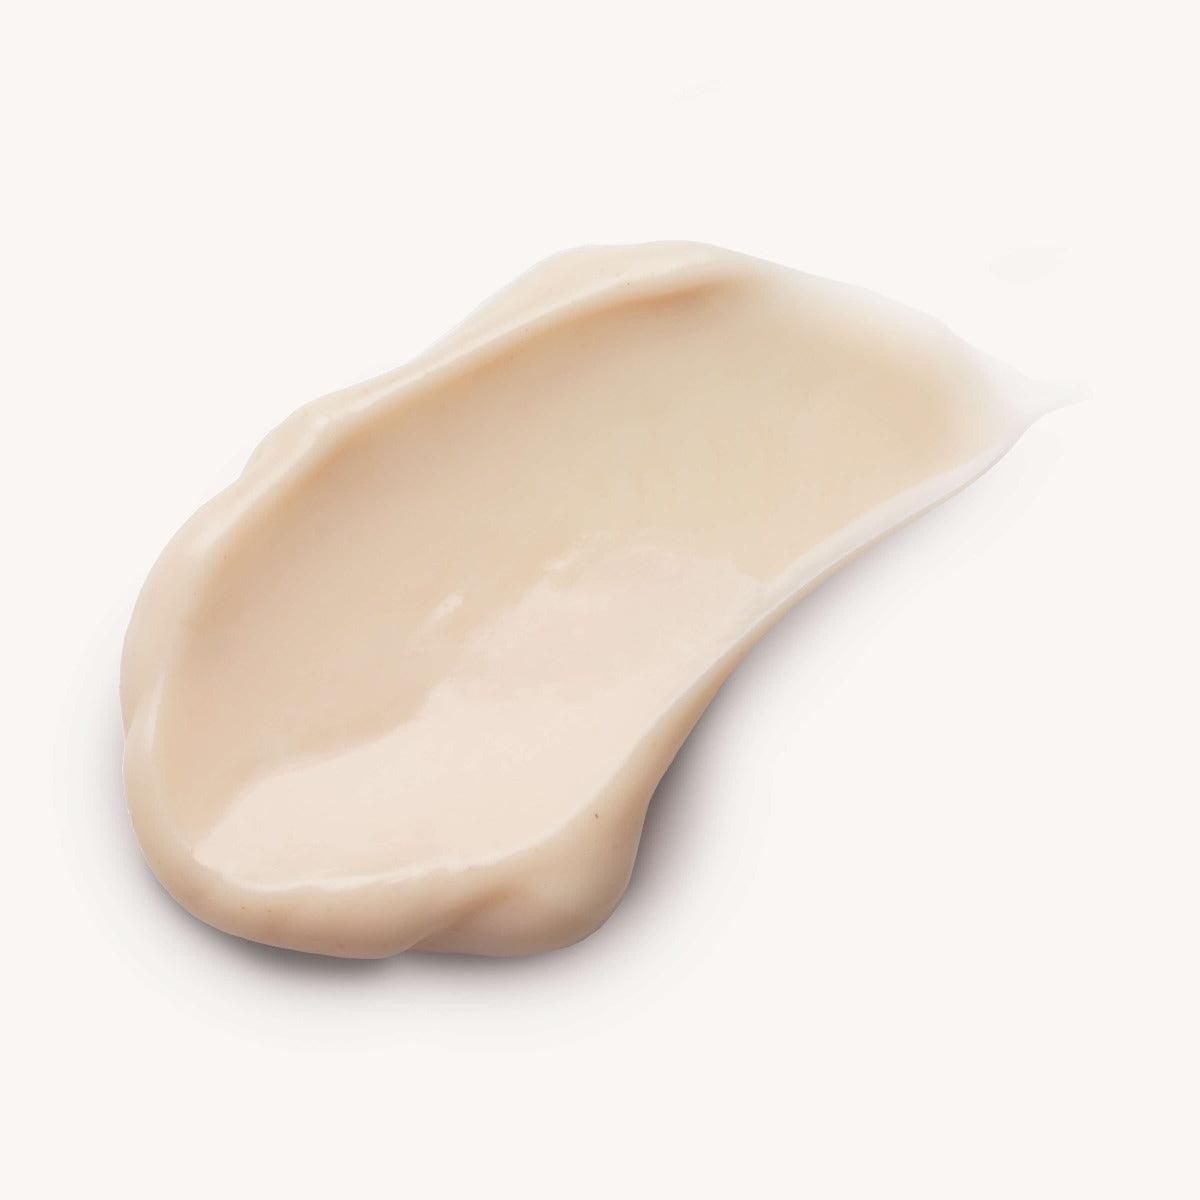 Sarah Chapman Skinesis Comfort Cream D-Stress texture product swatch on plain background